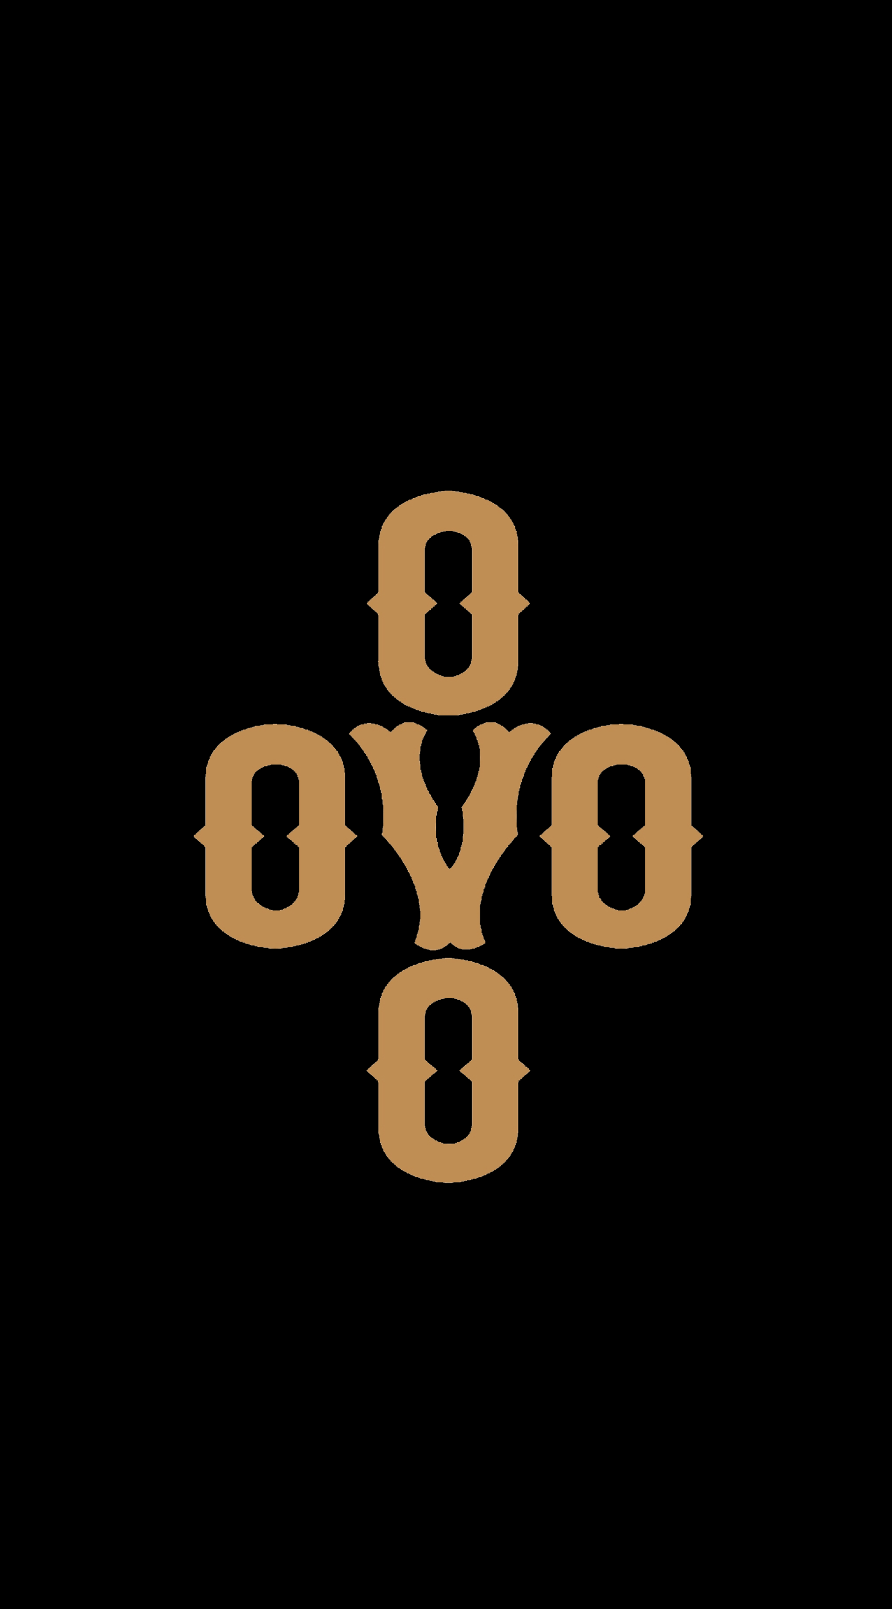 OVOXO Logo - Drake - OVO AMOLED Wallpapers - Album on Imgur